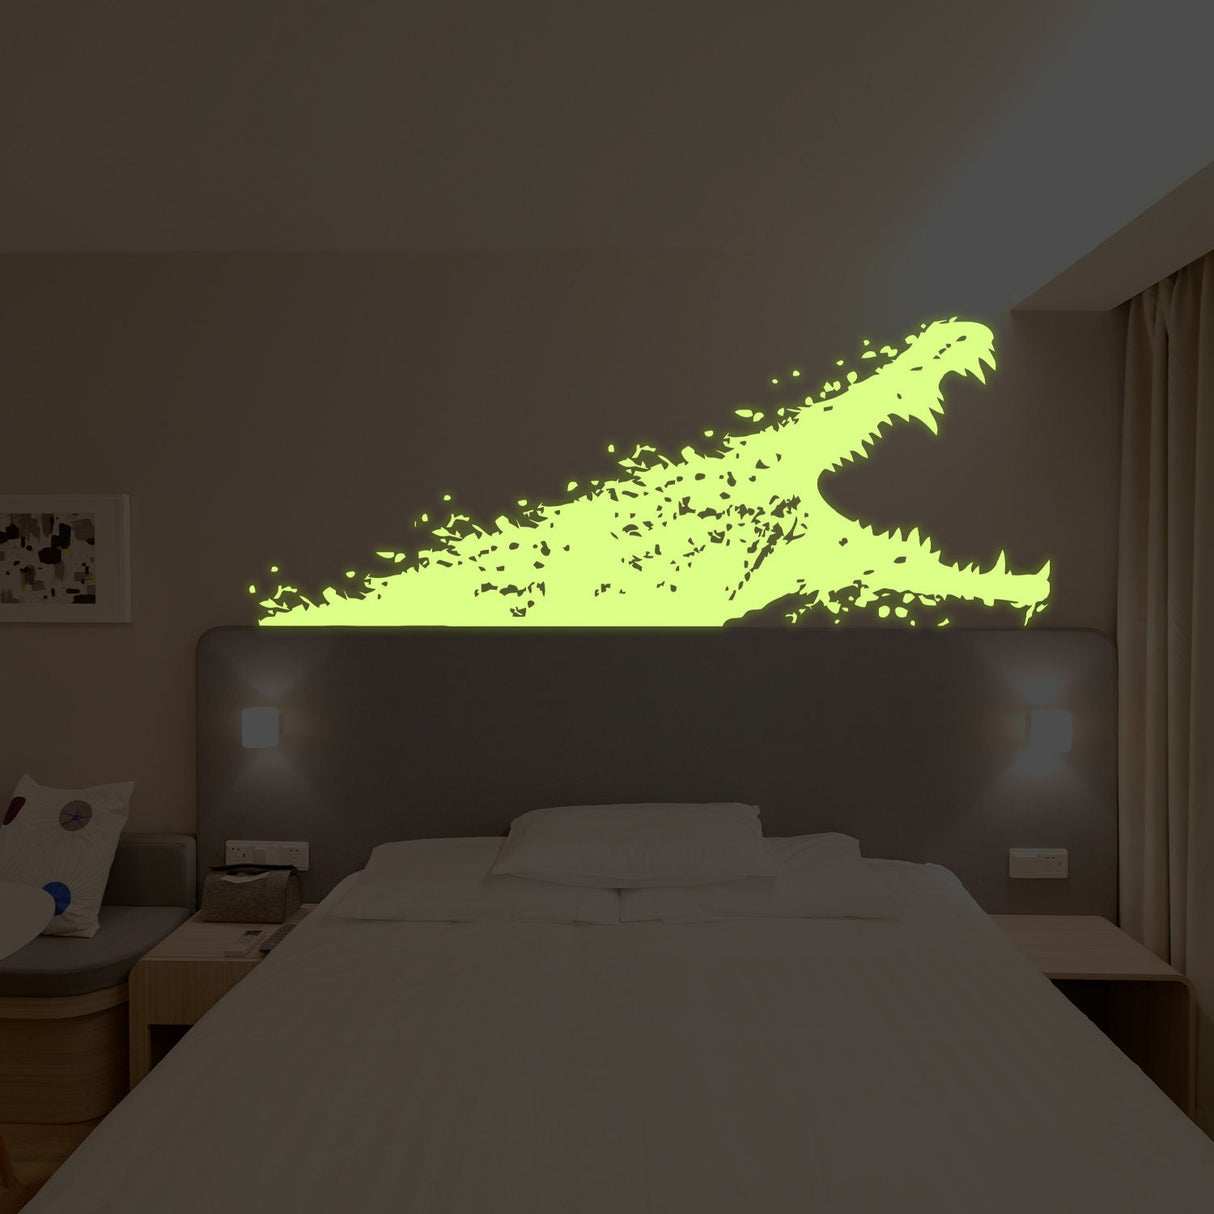 Glow In Dark Aligator Wall Sticker - Night Glowing Gator Vinyl Decal